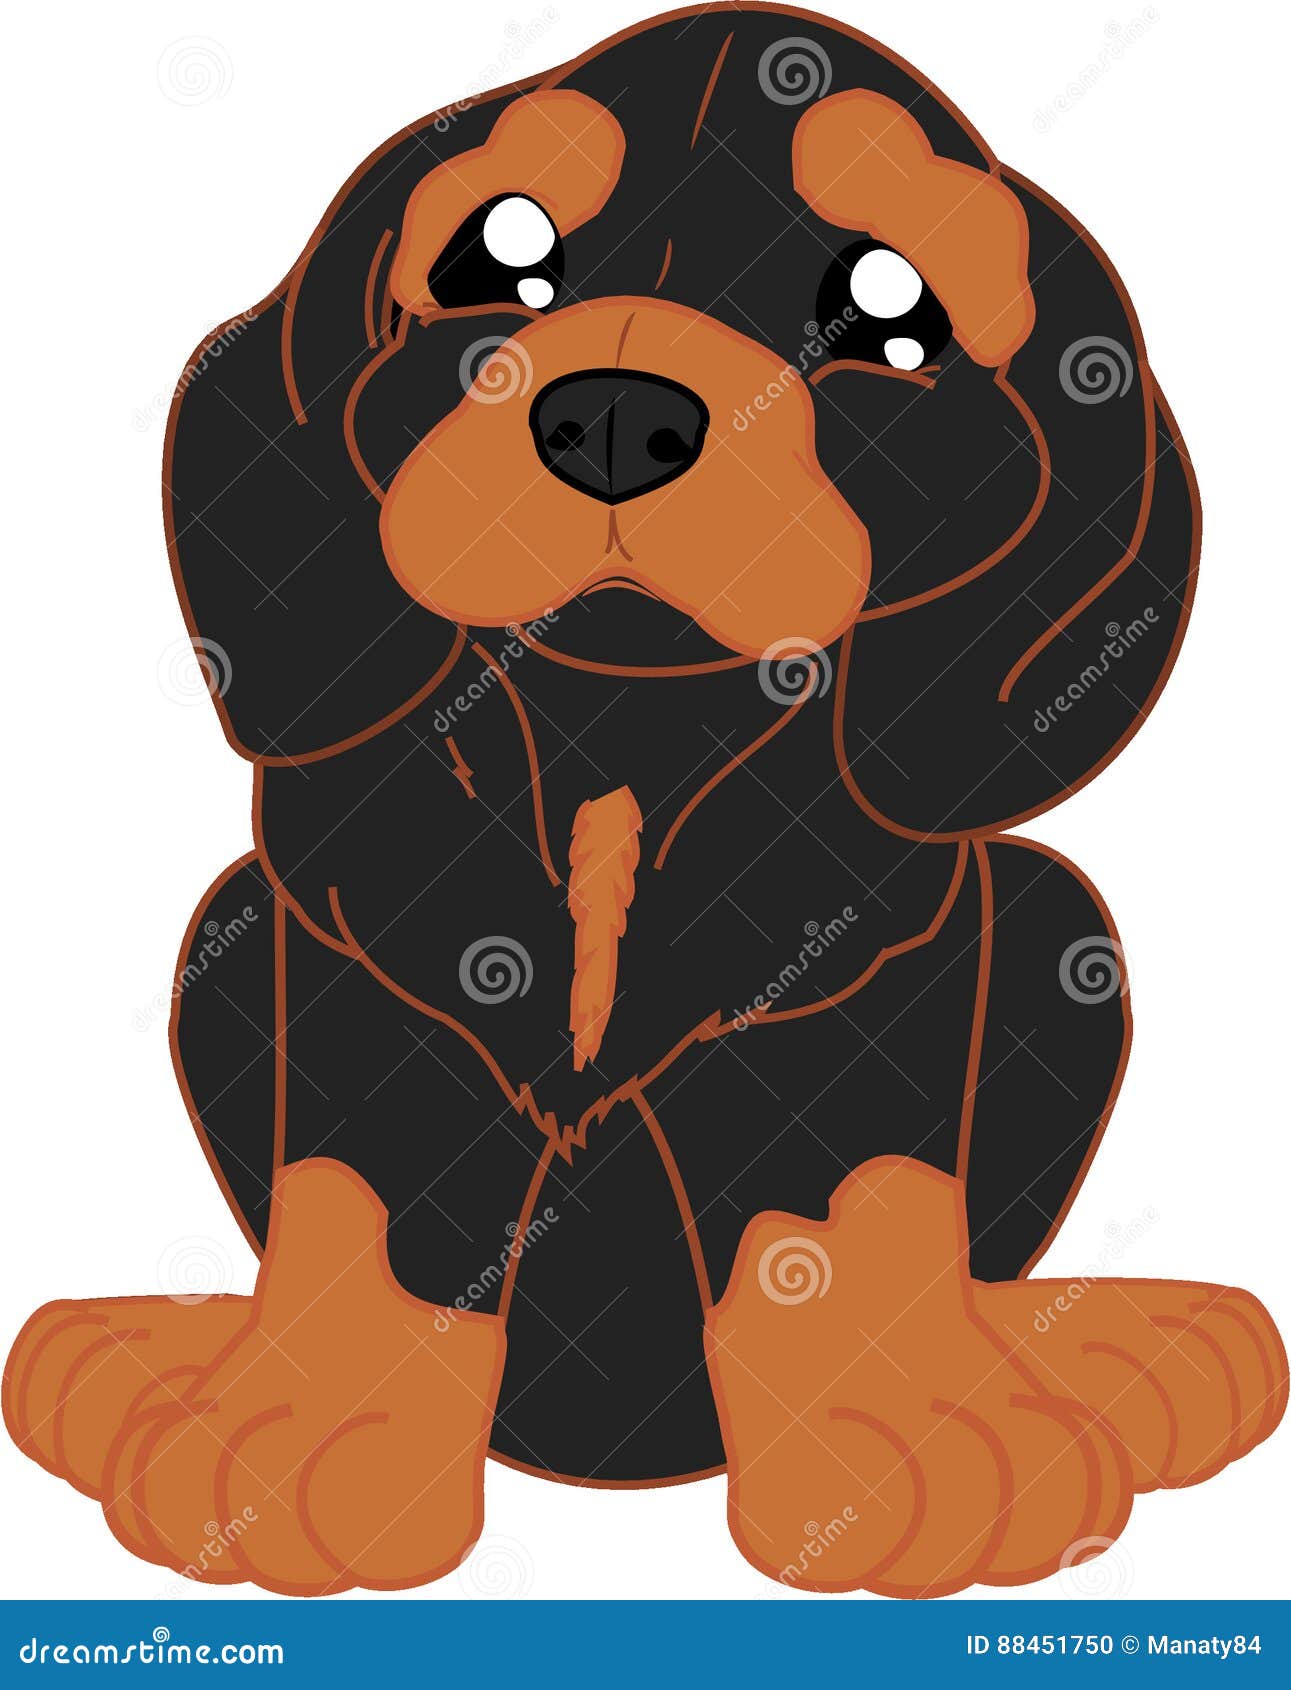 Cute cartoon dachshund stock vector. Illustration of animal - 88451750